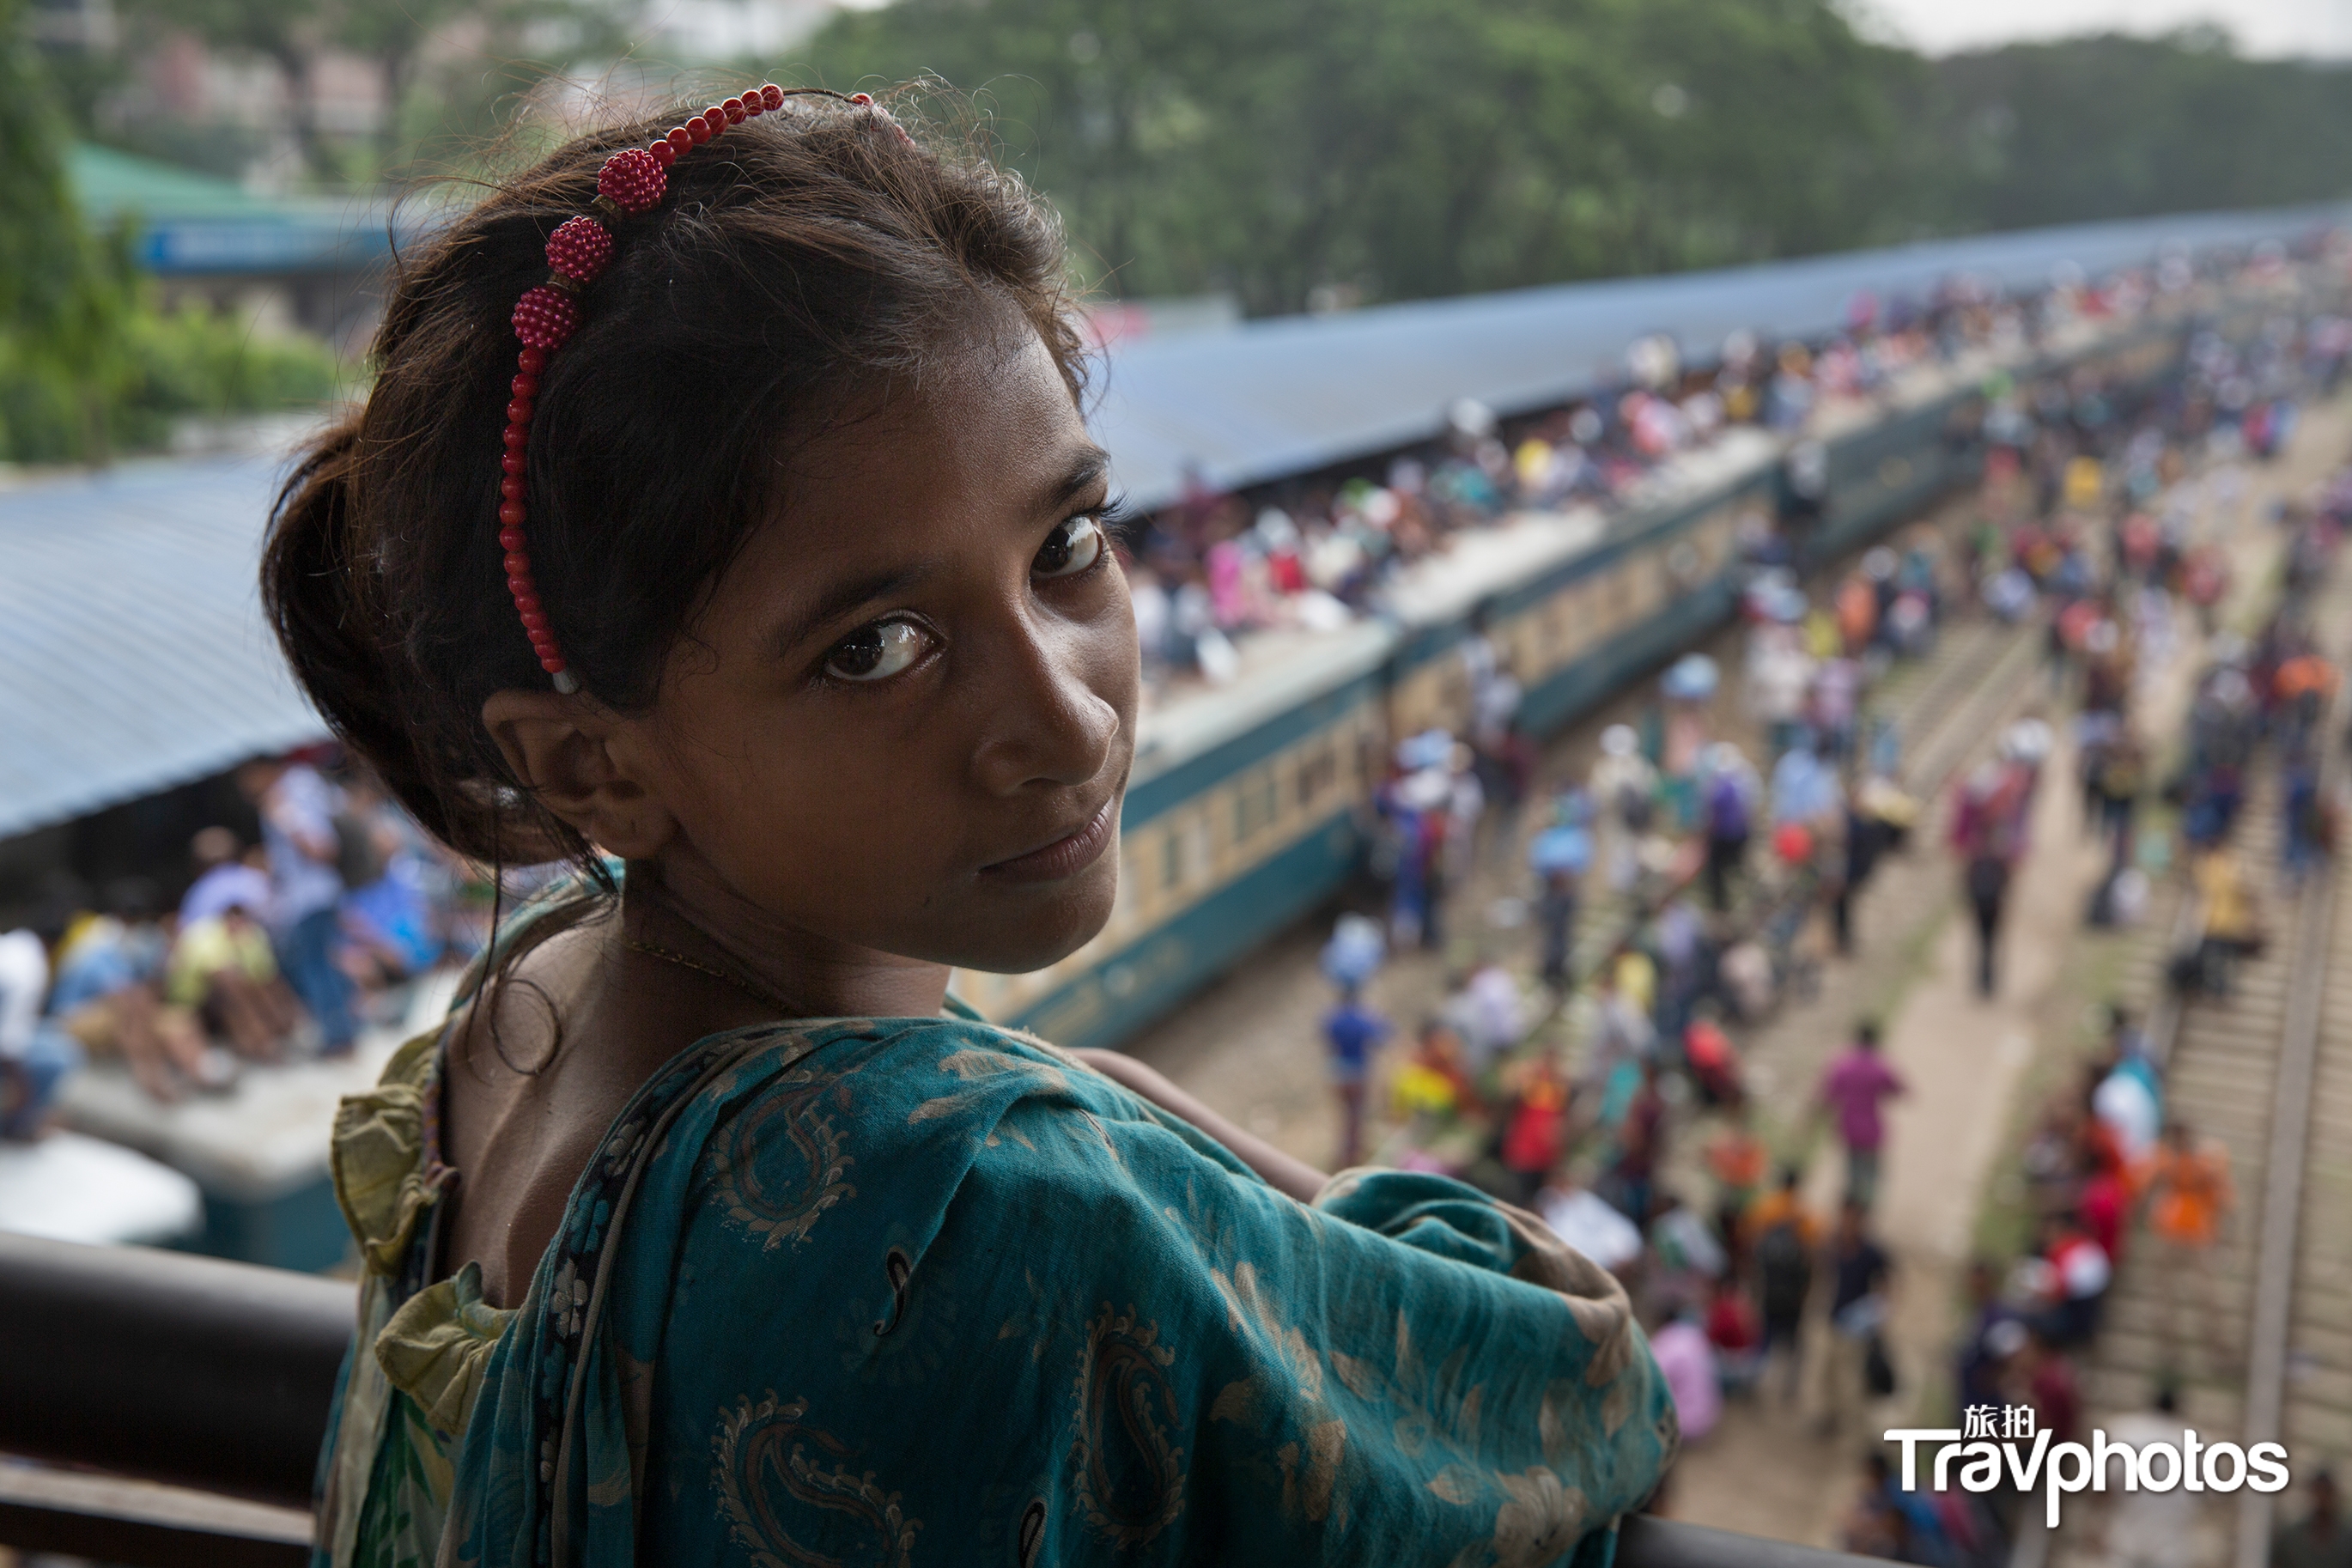 hk_c_《目光》 陸鑒平 +孟加拉國2018年6月開齋節前夕，孟加拉國首都達卡火車站天橋。一位女孩衣衫襤縷，瘦骨嶙峋，目光中卻滿是善良與溫柔。這幅照片主次分明，取捨合理，把人文關懷引入開齋節運輸，引發觀者惻隱之心，讓人過目難忘。.jpg